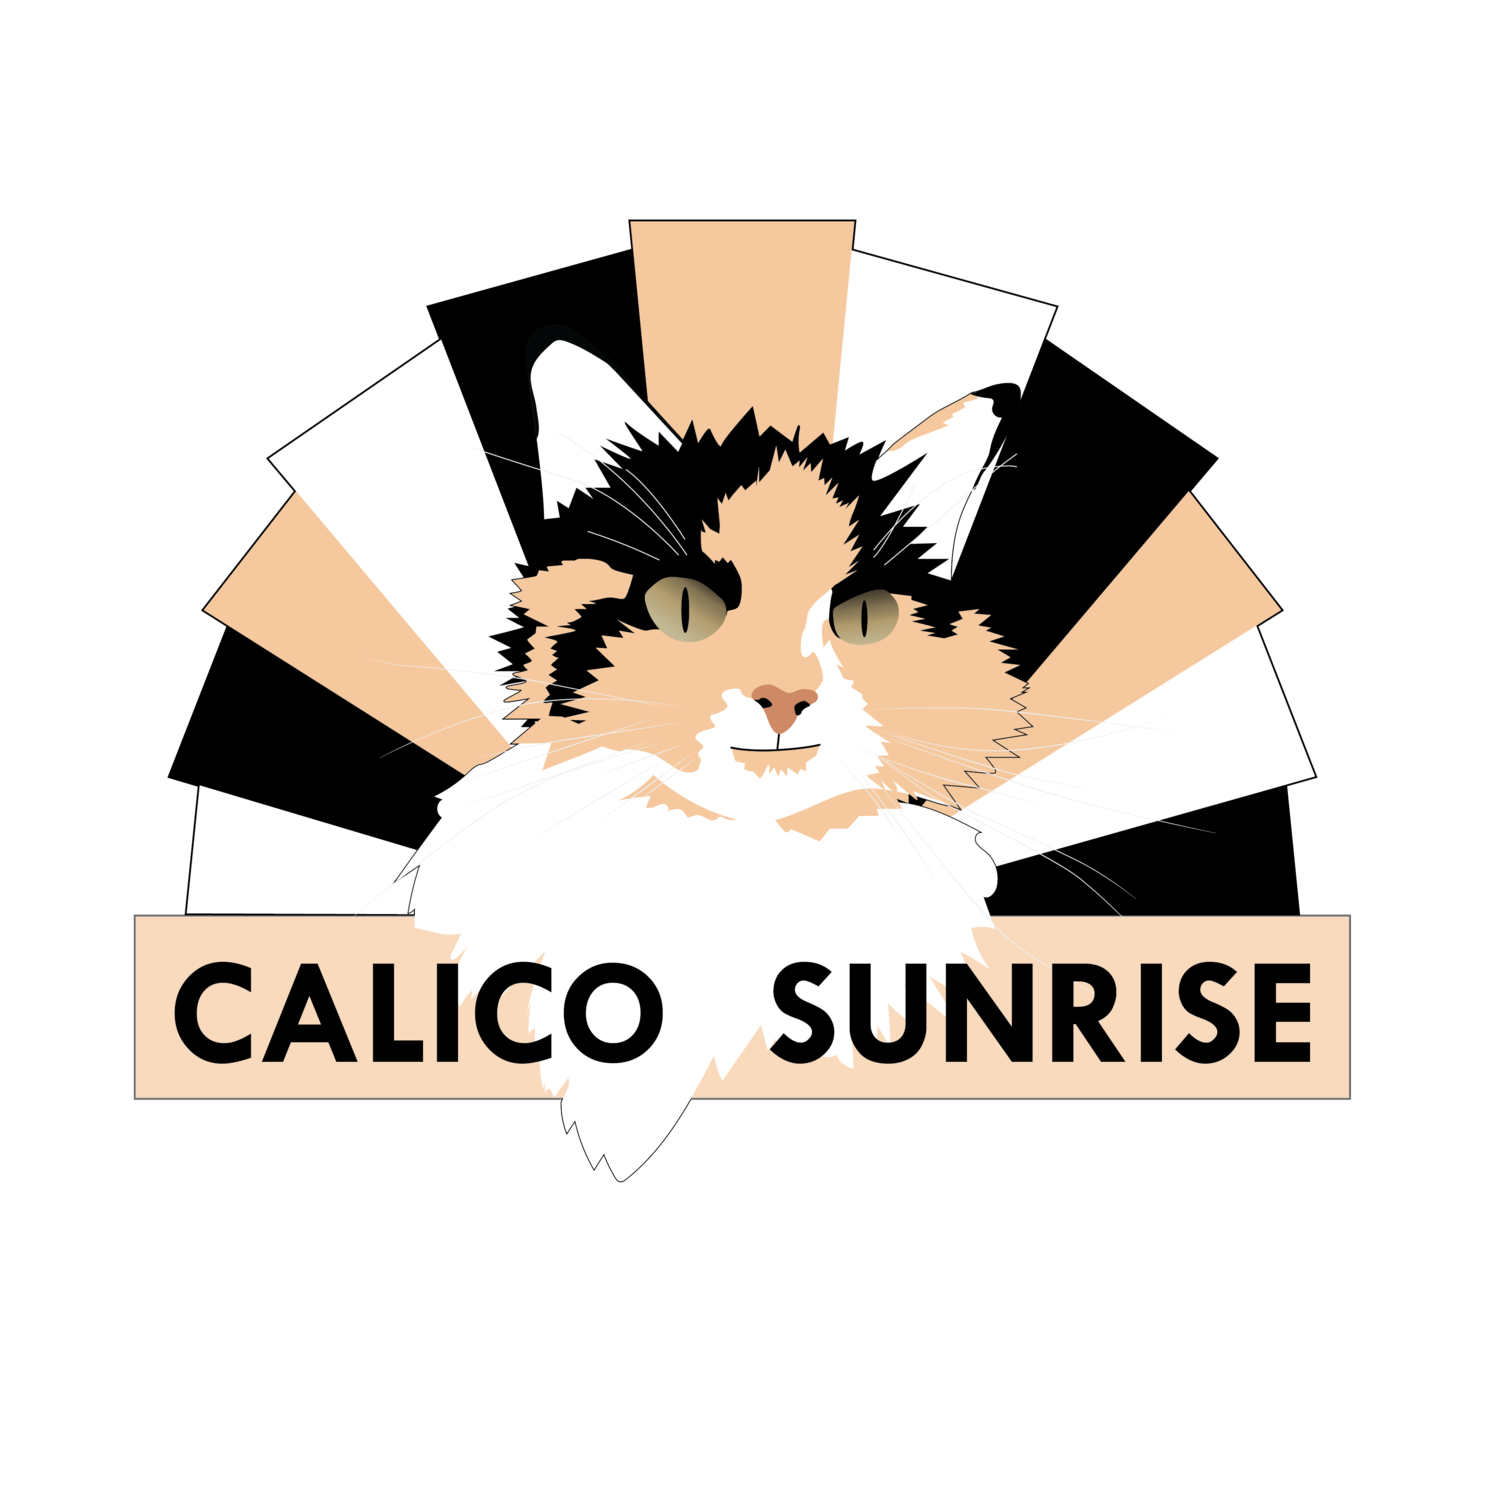 Calico Sunrise